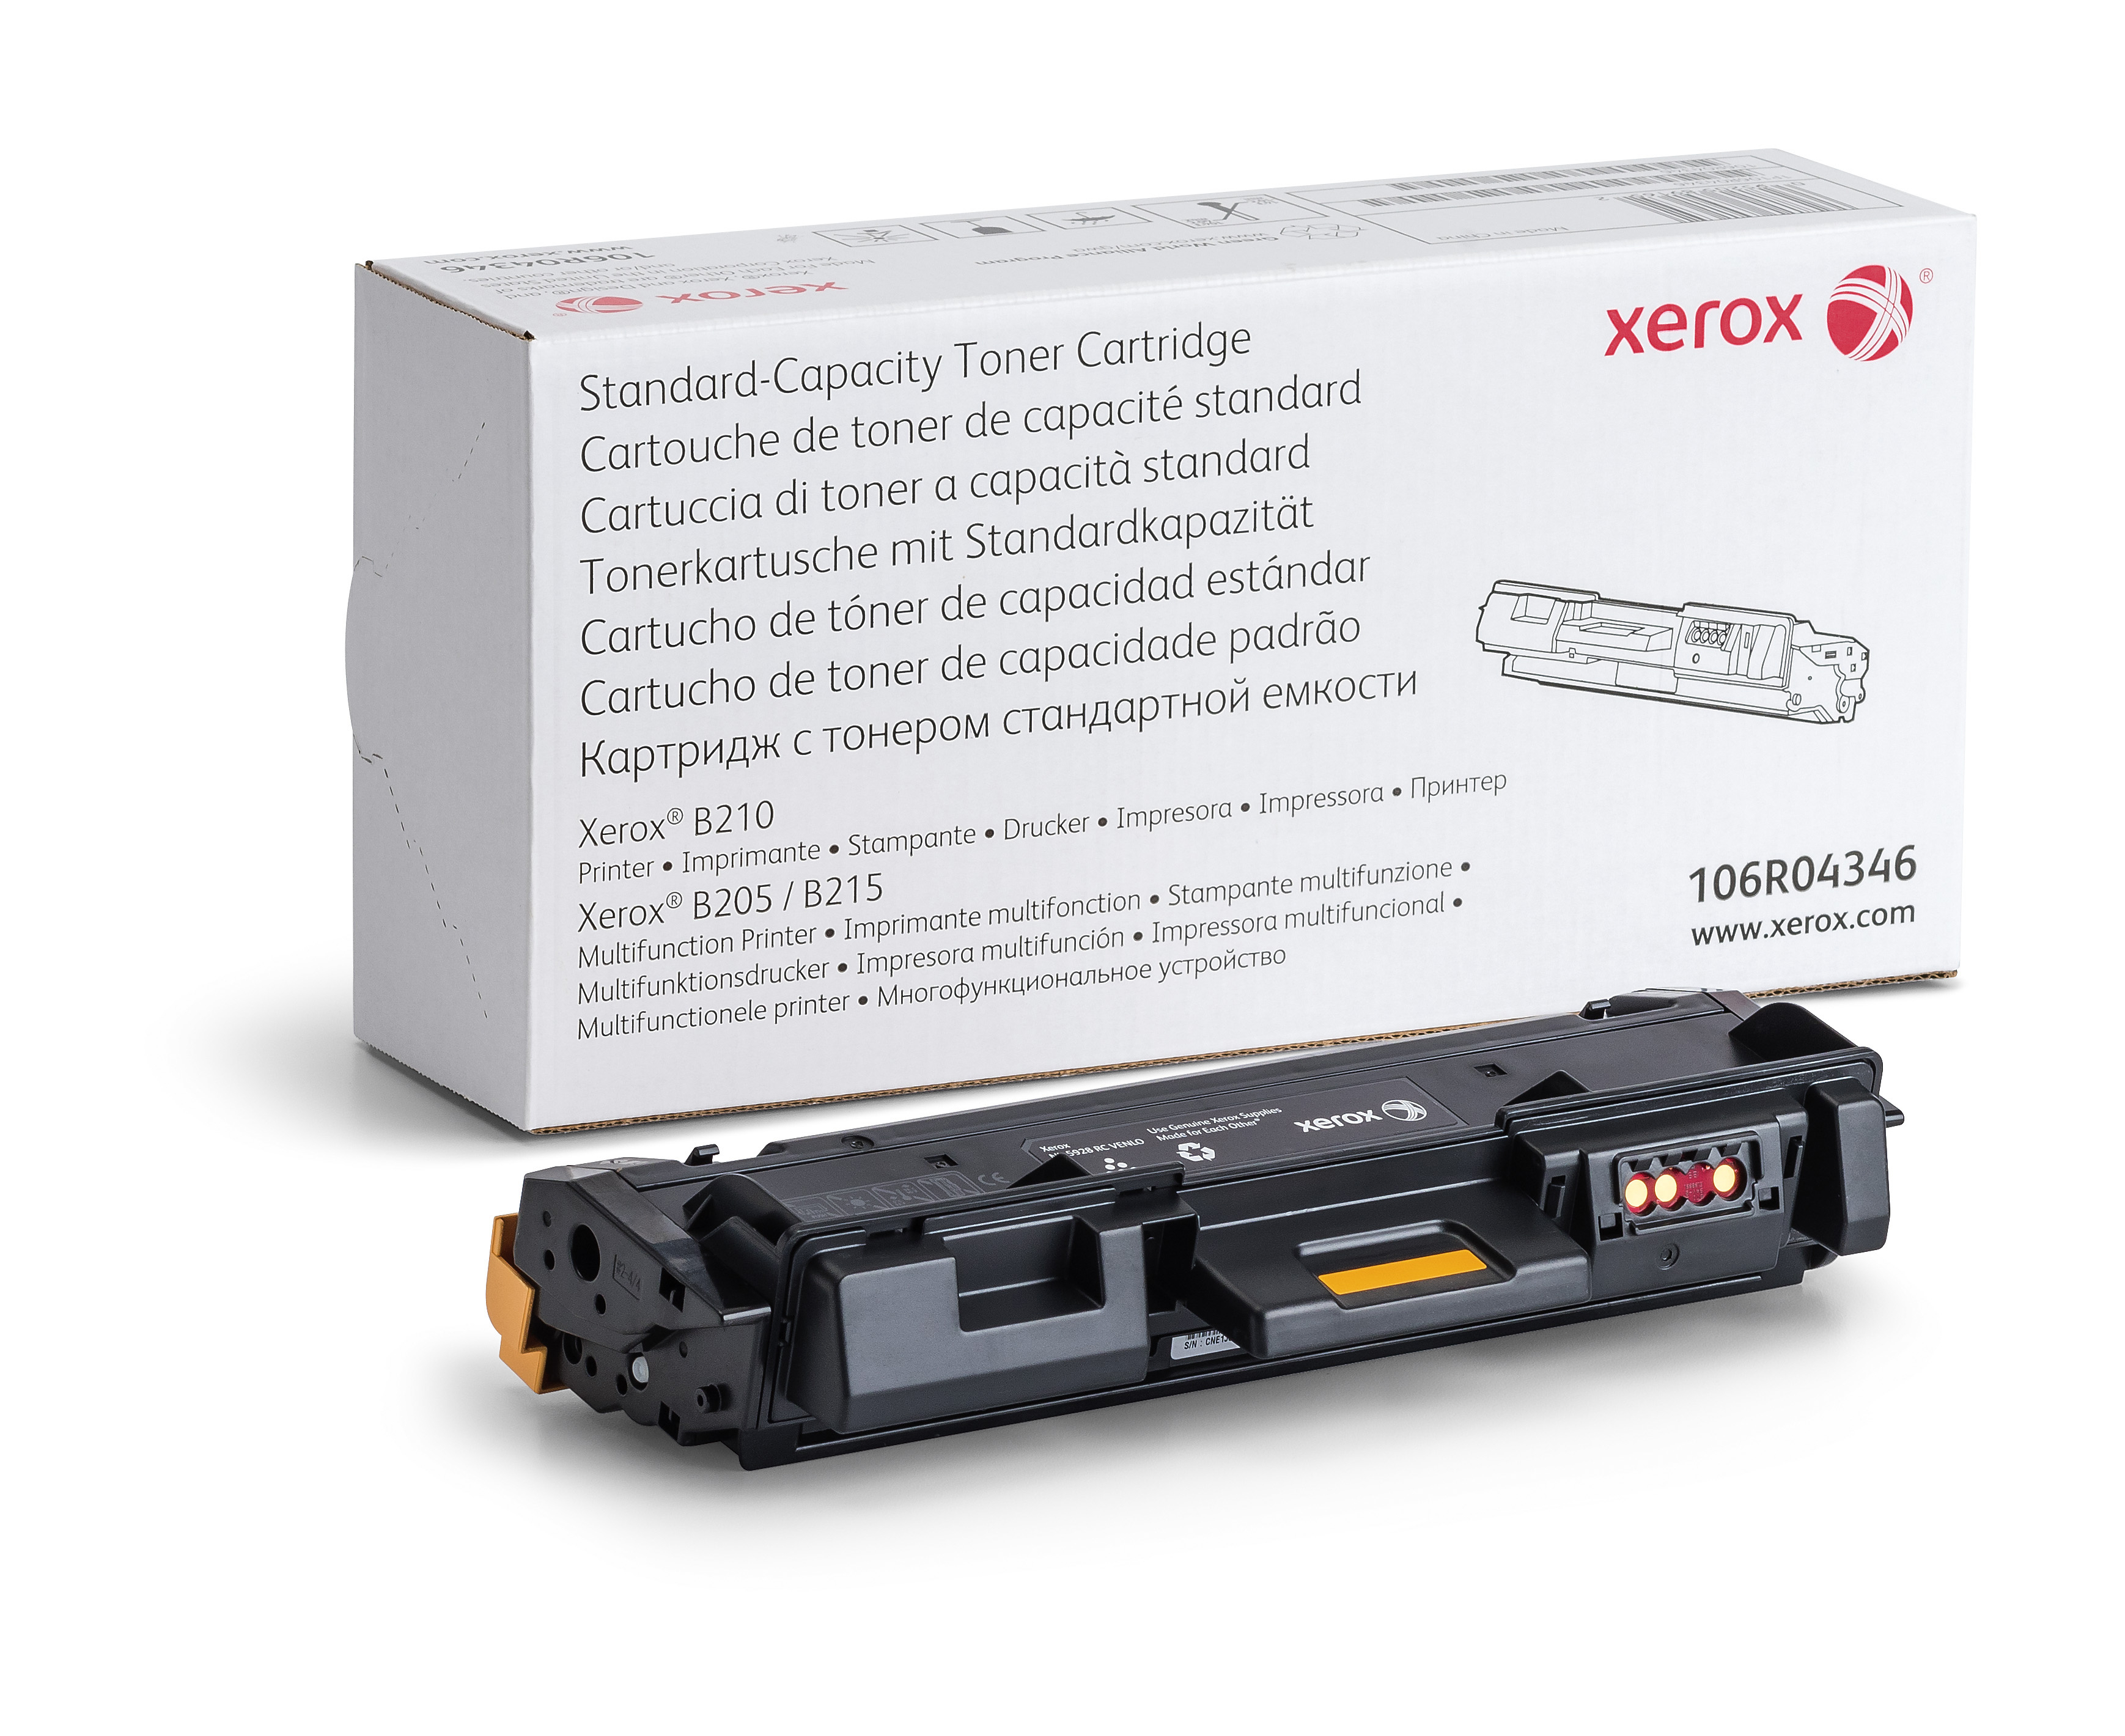 Xerox B210 Printer, B205 MFP, B215 MFP Standard-Capacity Toner Cartridge  (1500 Pages) 106R04346 Genuine Xerox Supplies